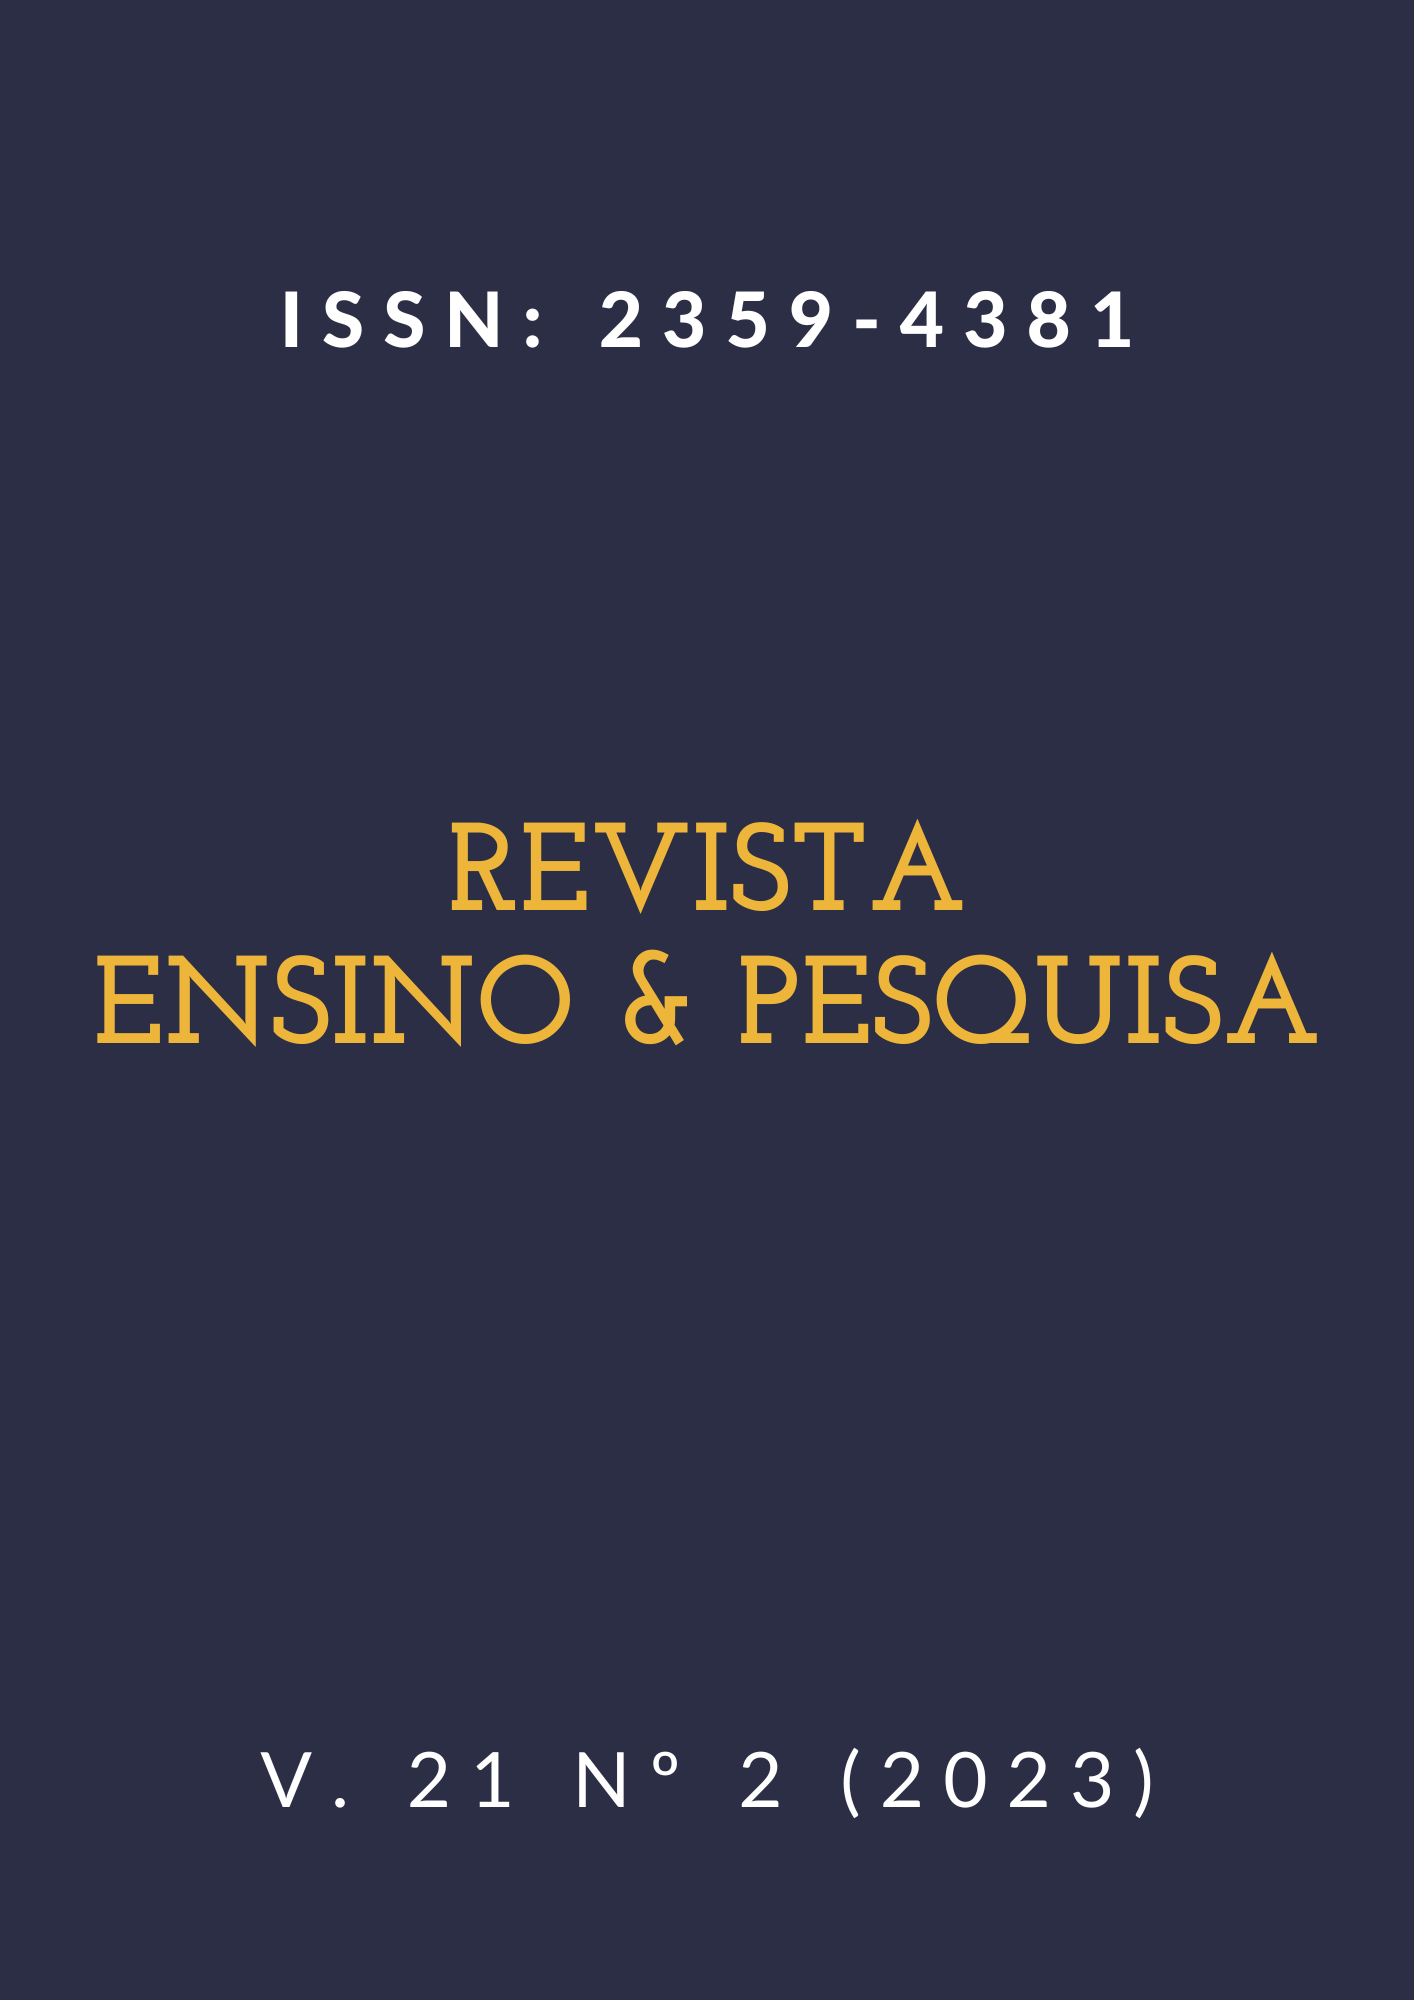 					Visualizar v. 21 n. 2 (2023): Ensino & Pesquisa
				